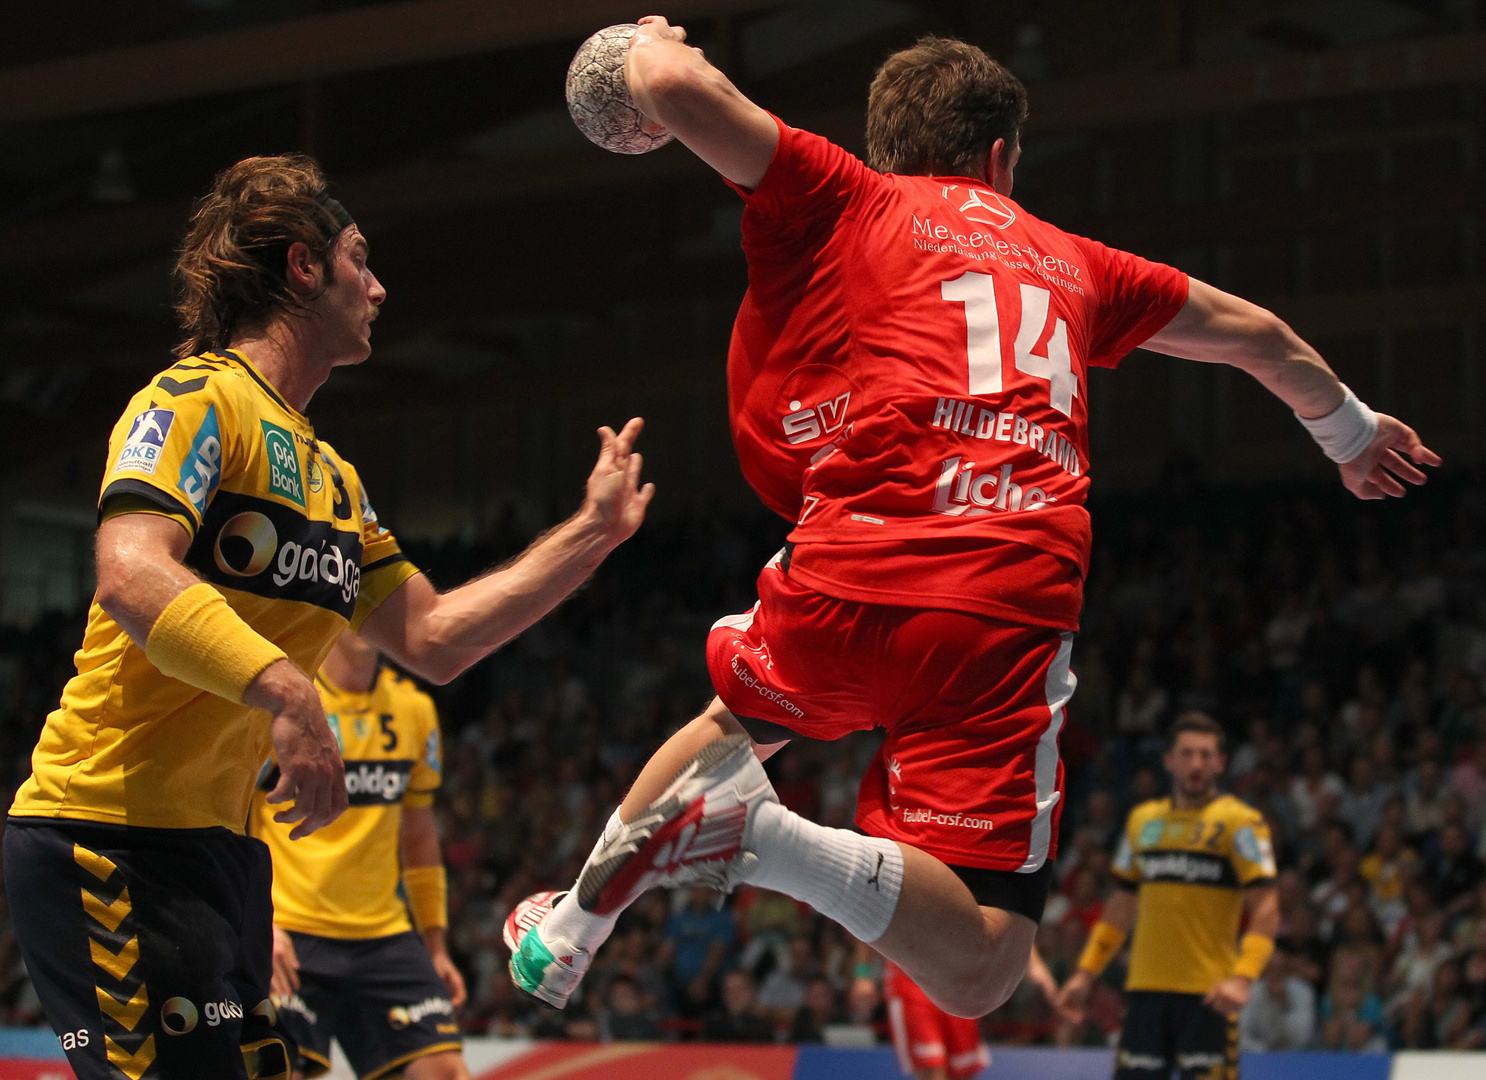 ... Torwurf - Handball Bundesliga 2012/13